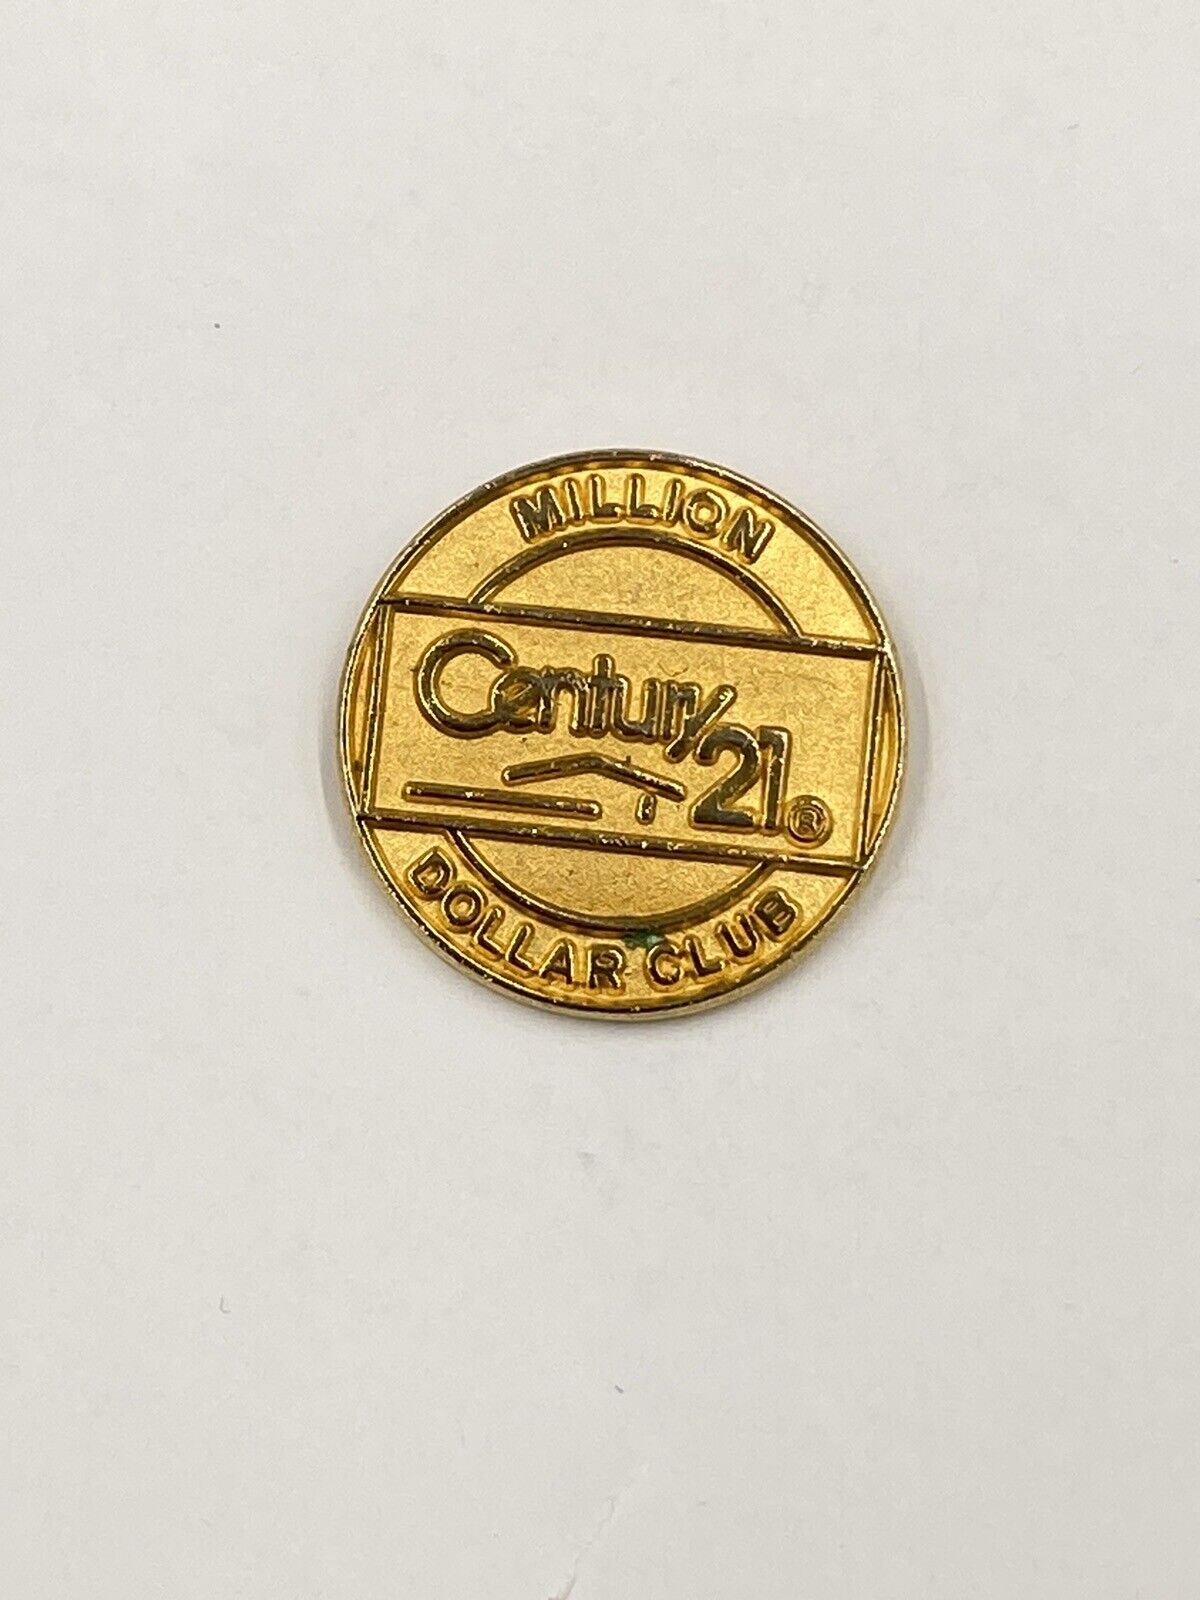 Gold Colored Century 21 Million Dollar Club Lapel Pin